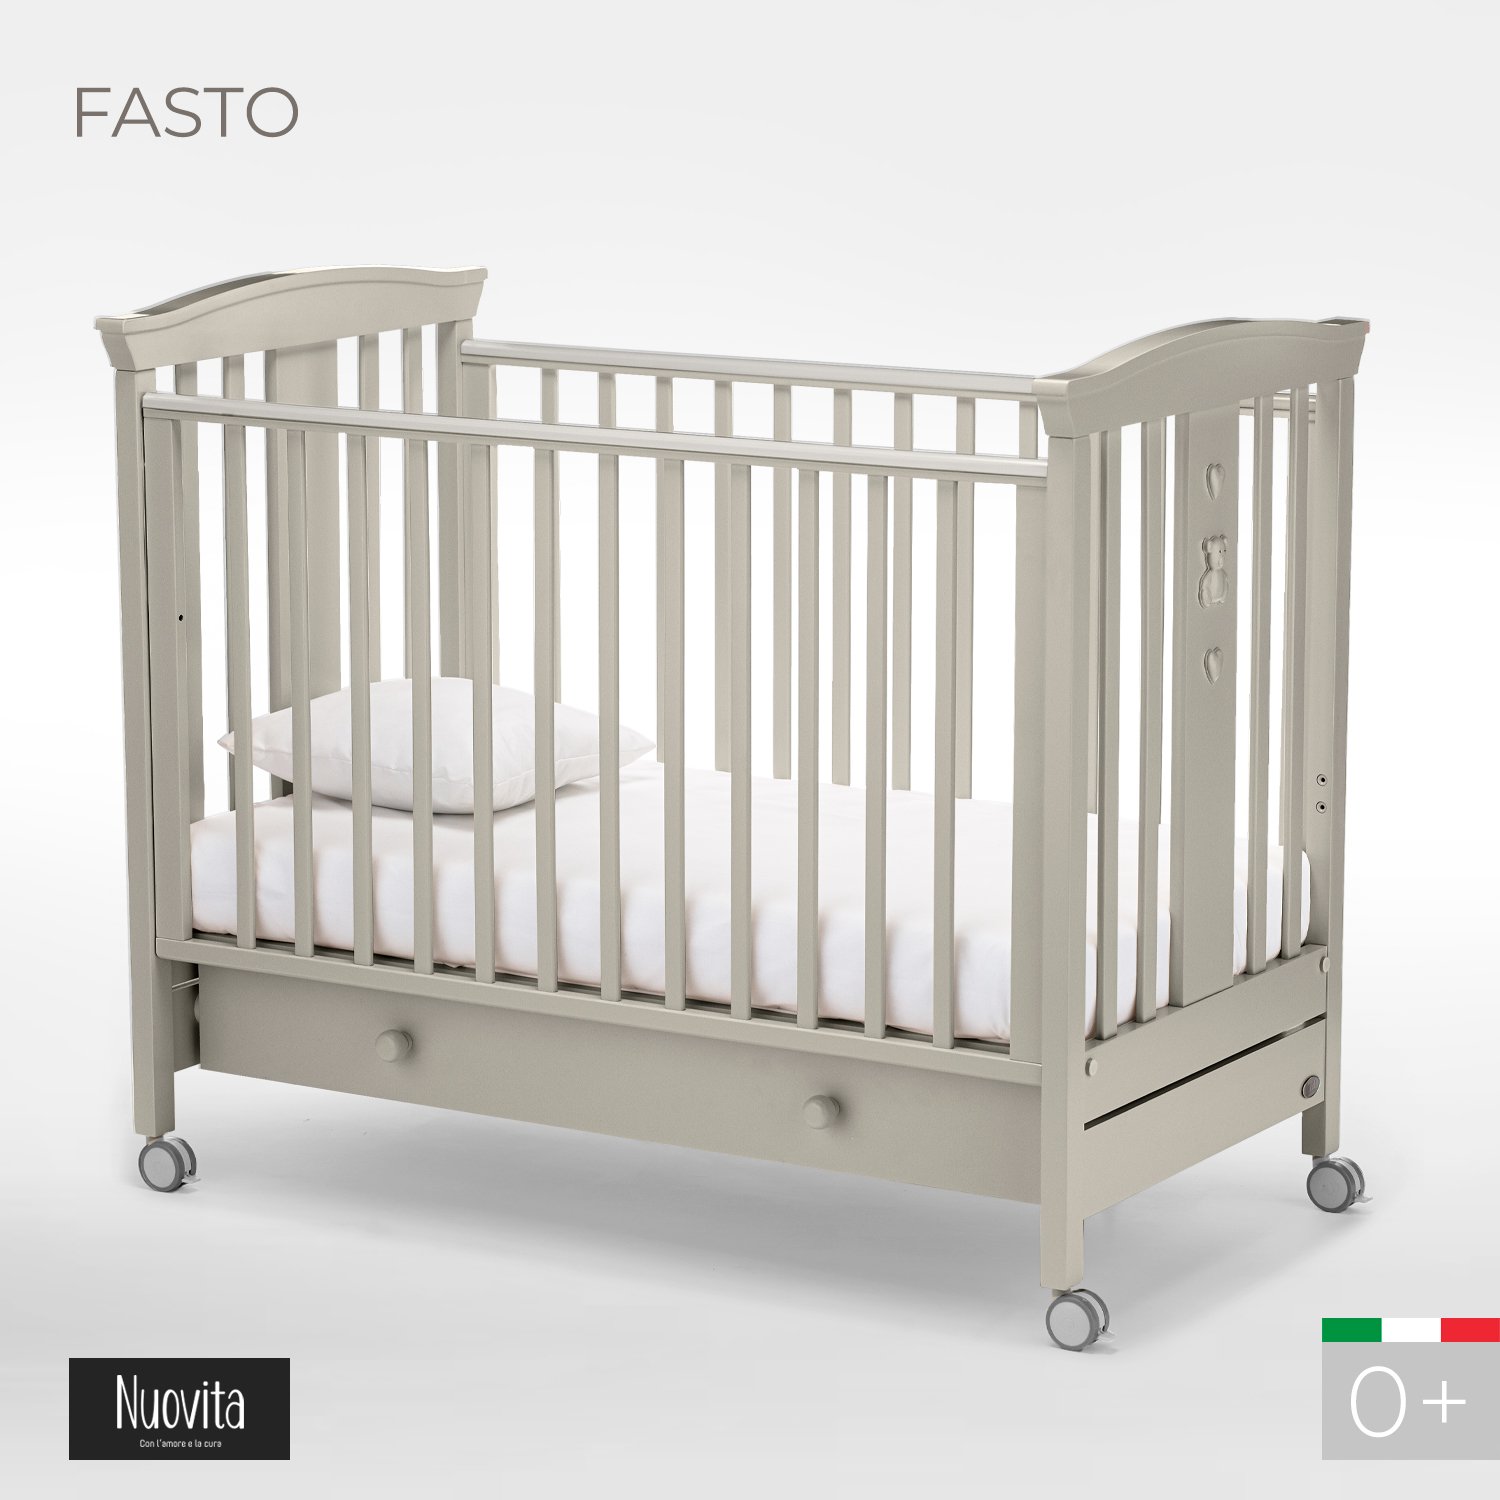 Детская кровать Nuovita Fasto Il monsone, Муссон